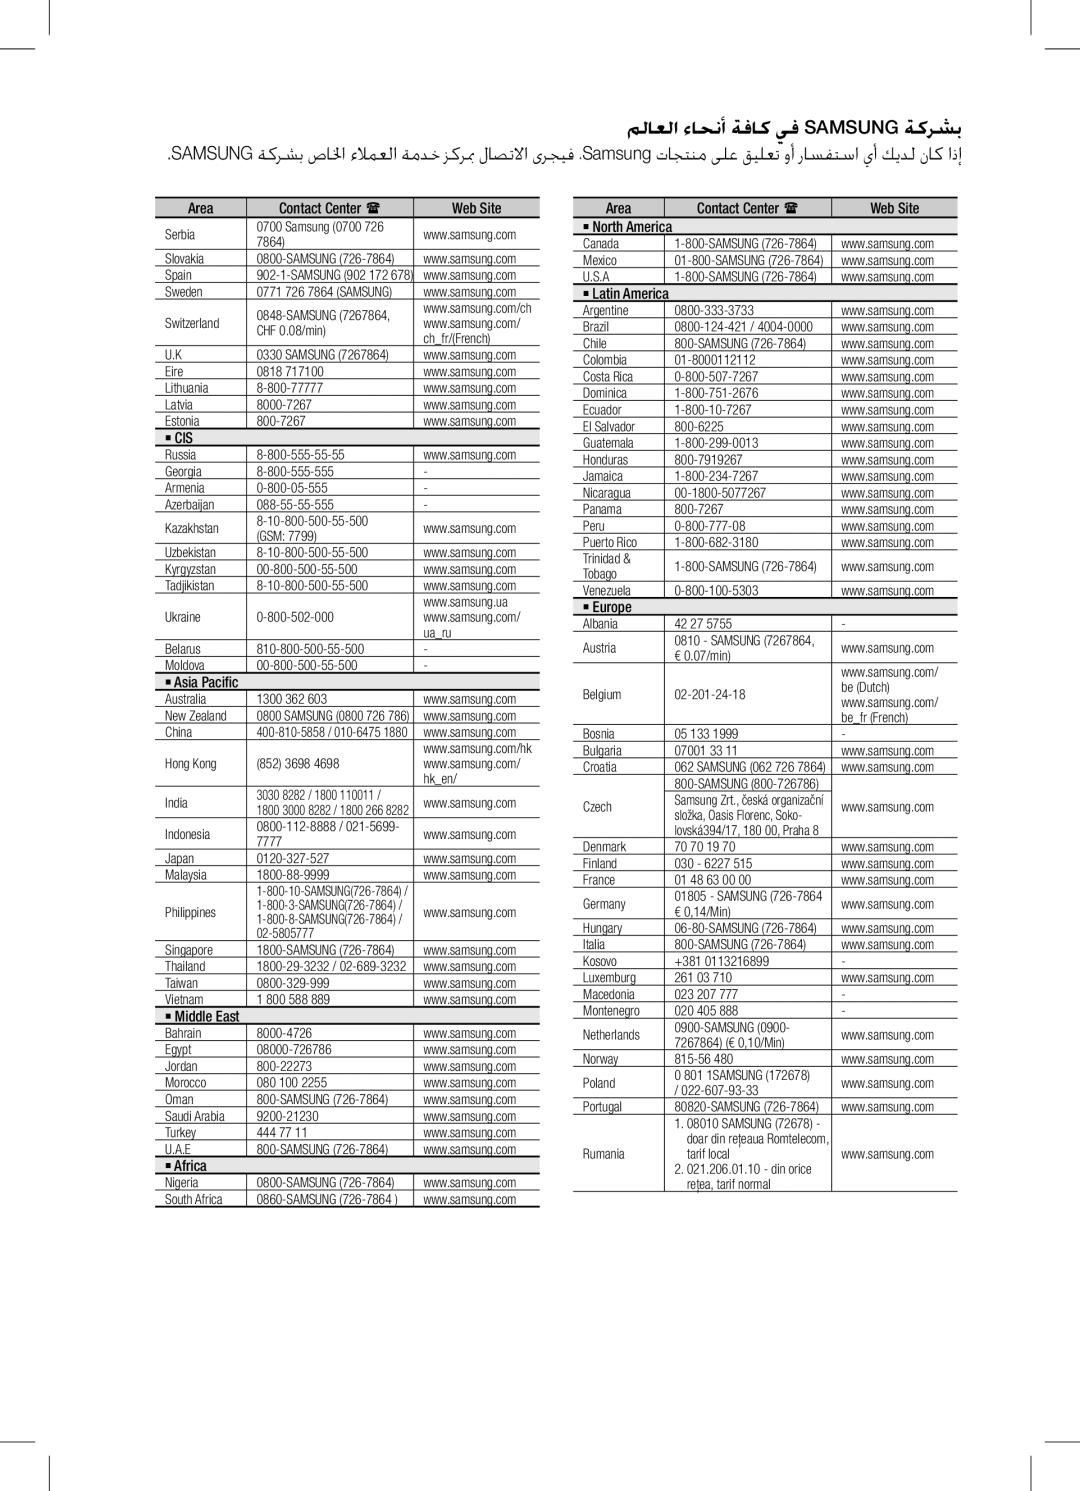 Samsung HT-D6750WK/SQ manual Indonesia 7777 Japan 0120-327-527 Malaysia 1800-88-9999 